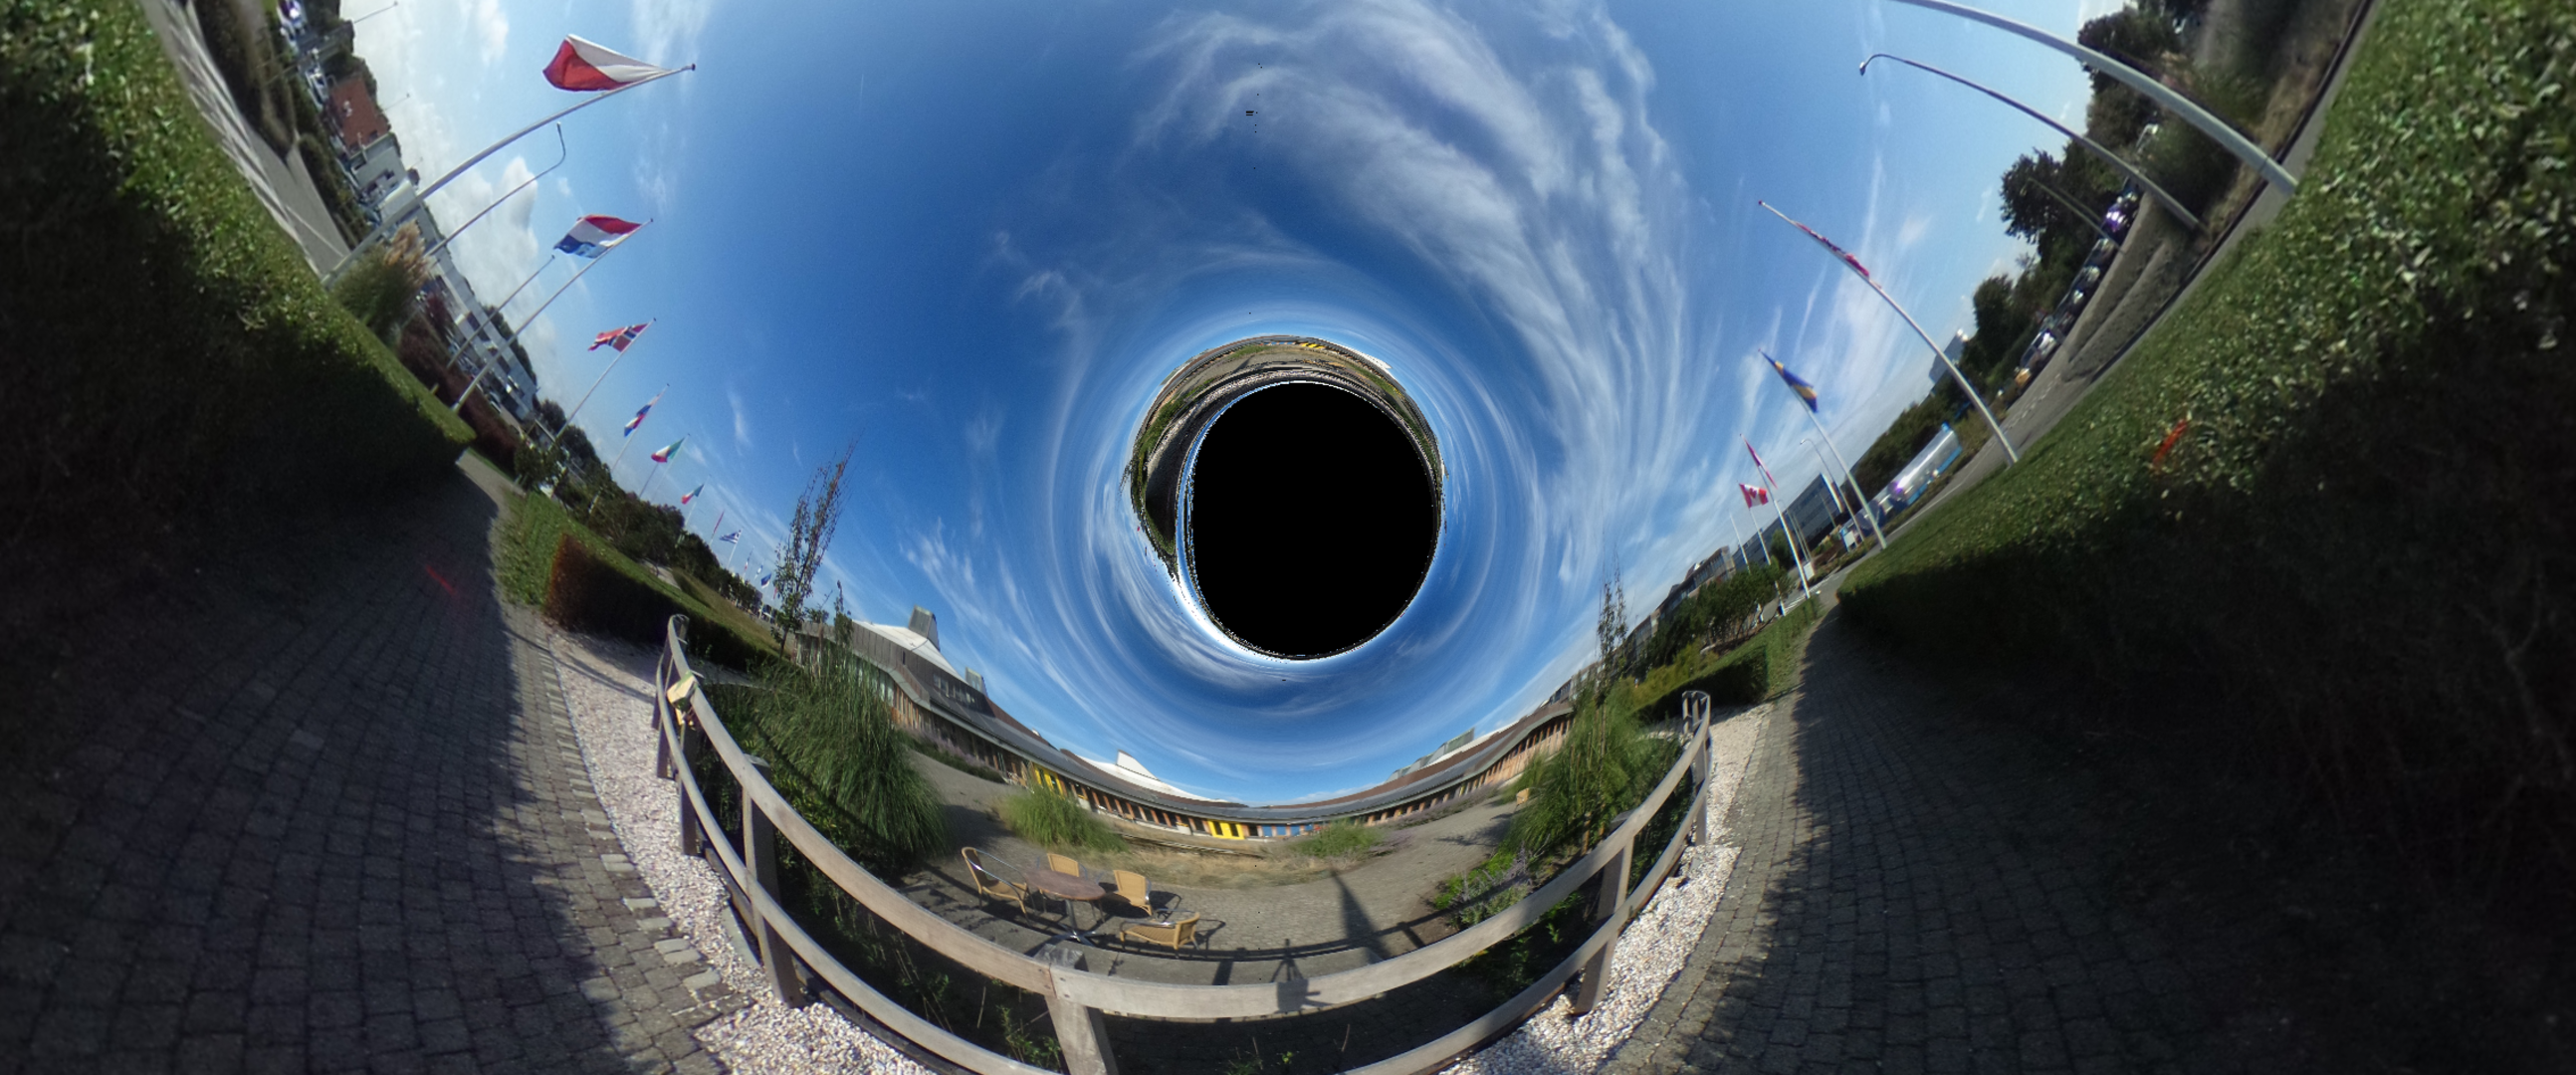 Simulated black hole